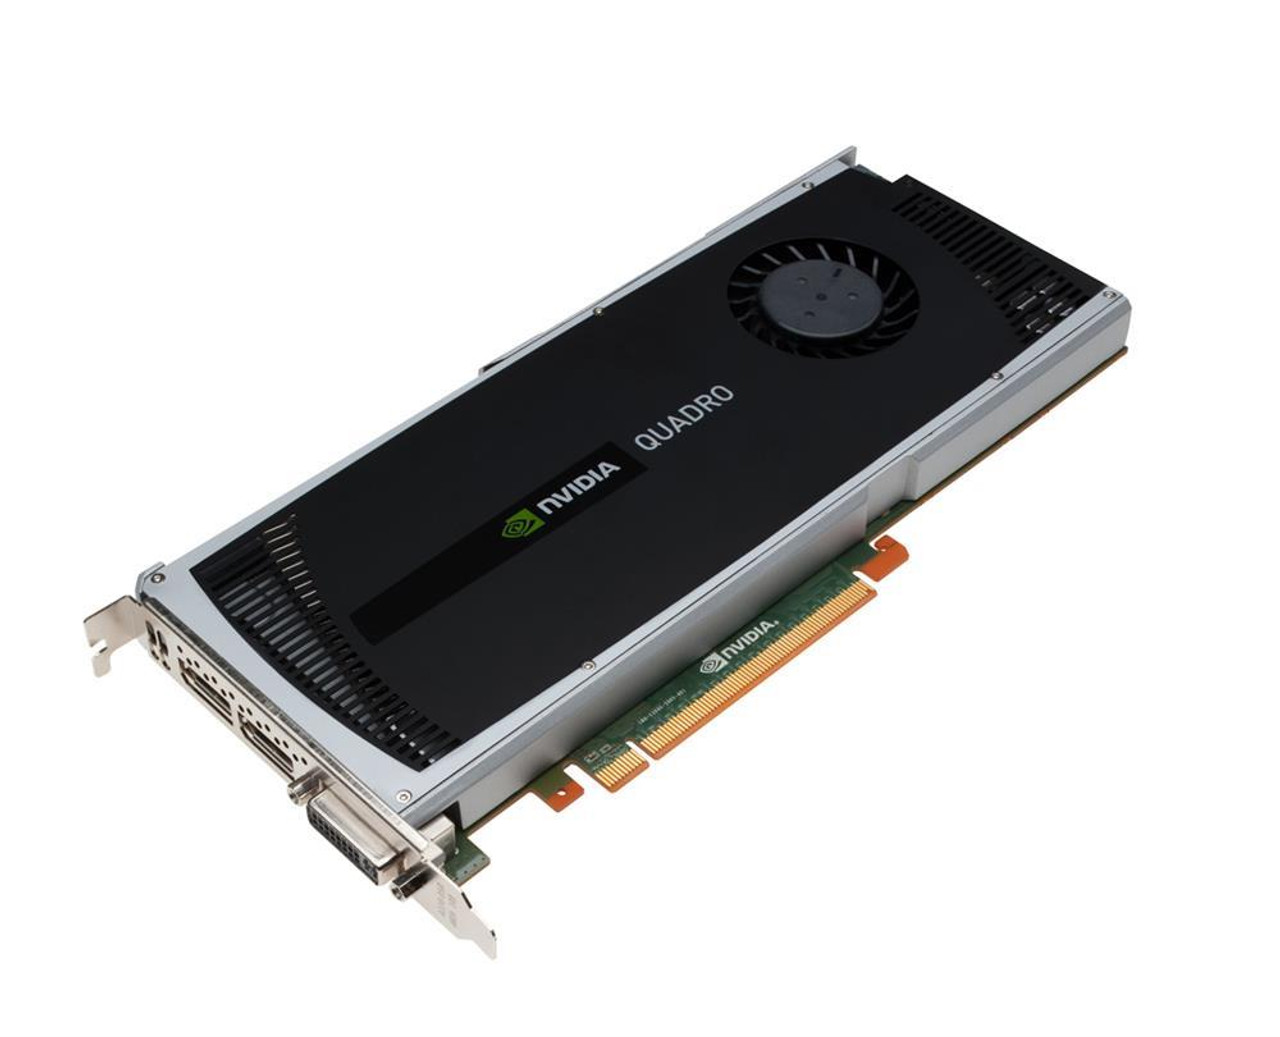 Håndfuld Fradrage Imponerende AOC-GPU-NVQ4000 Supermicro Quadro 4000 Graphic Card 2GB GDDR5 PCI Expr